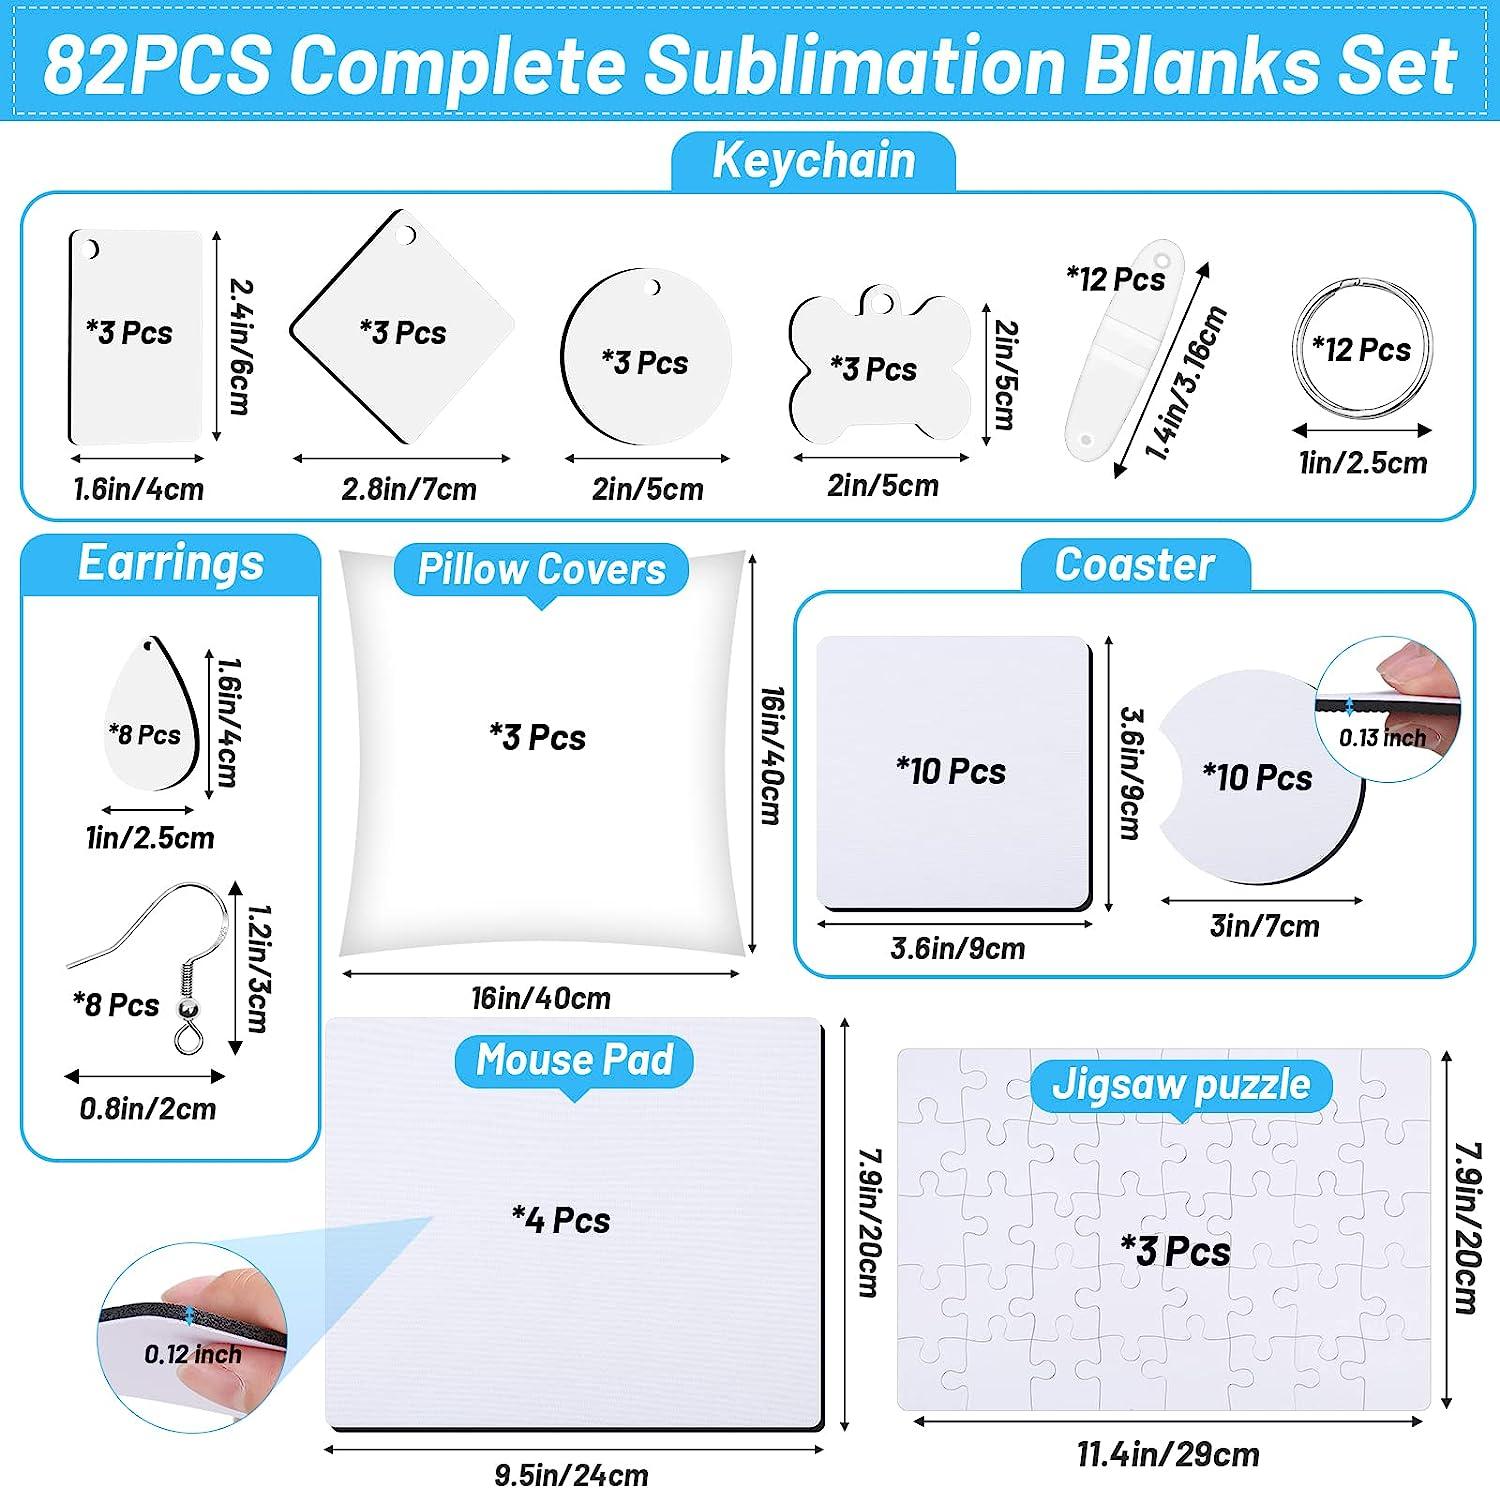 82 PCS Sublimation Blanks Products Set, Modacraft DIY Sublimation